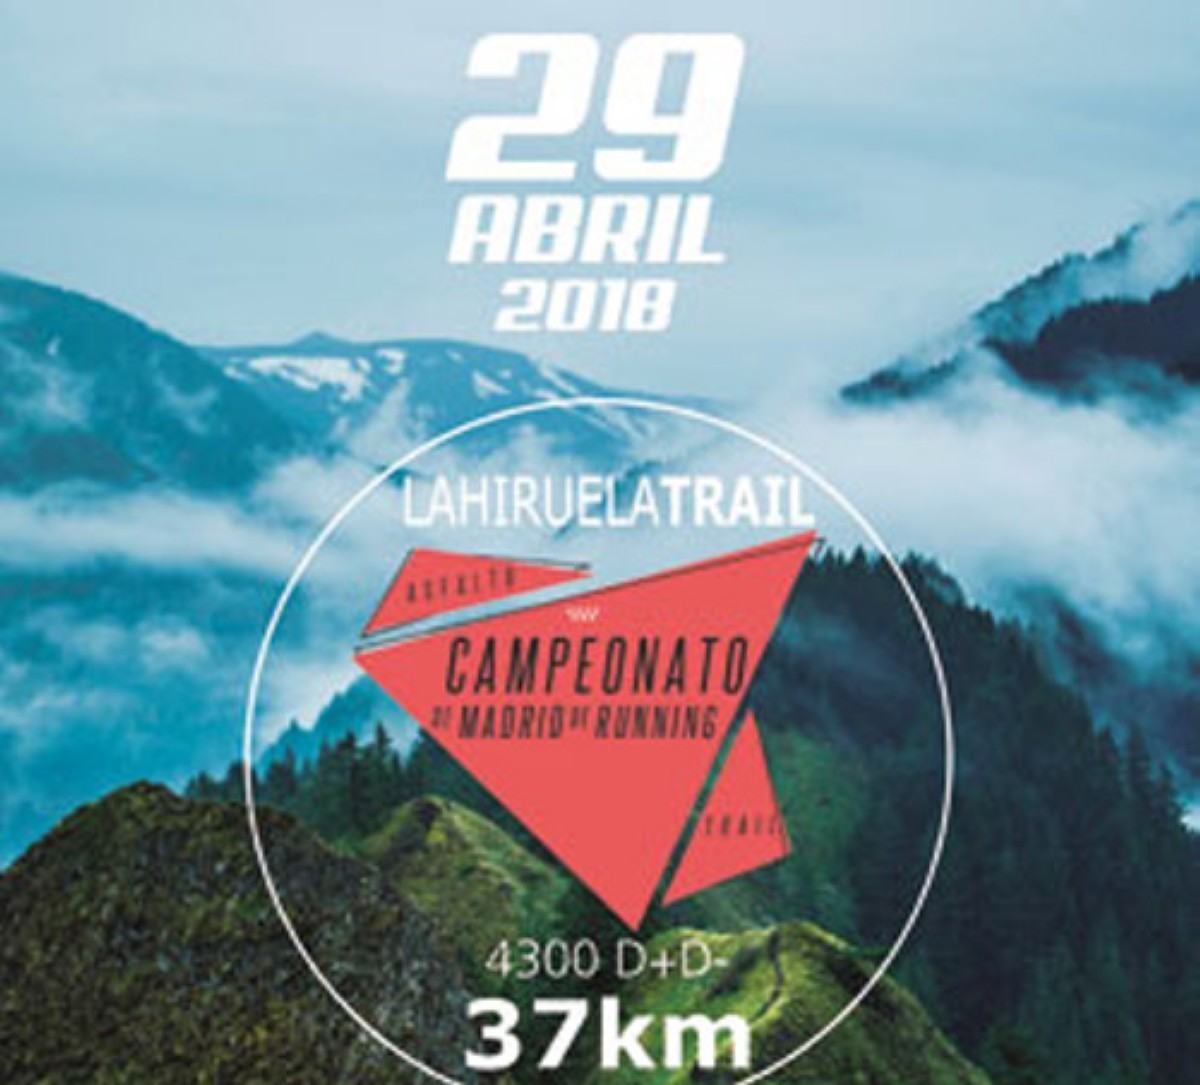 En marcha el Campeonato Madrid Running Trail